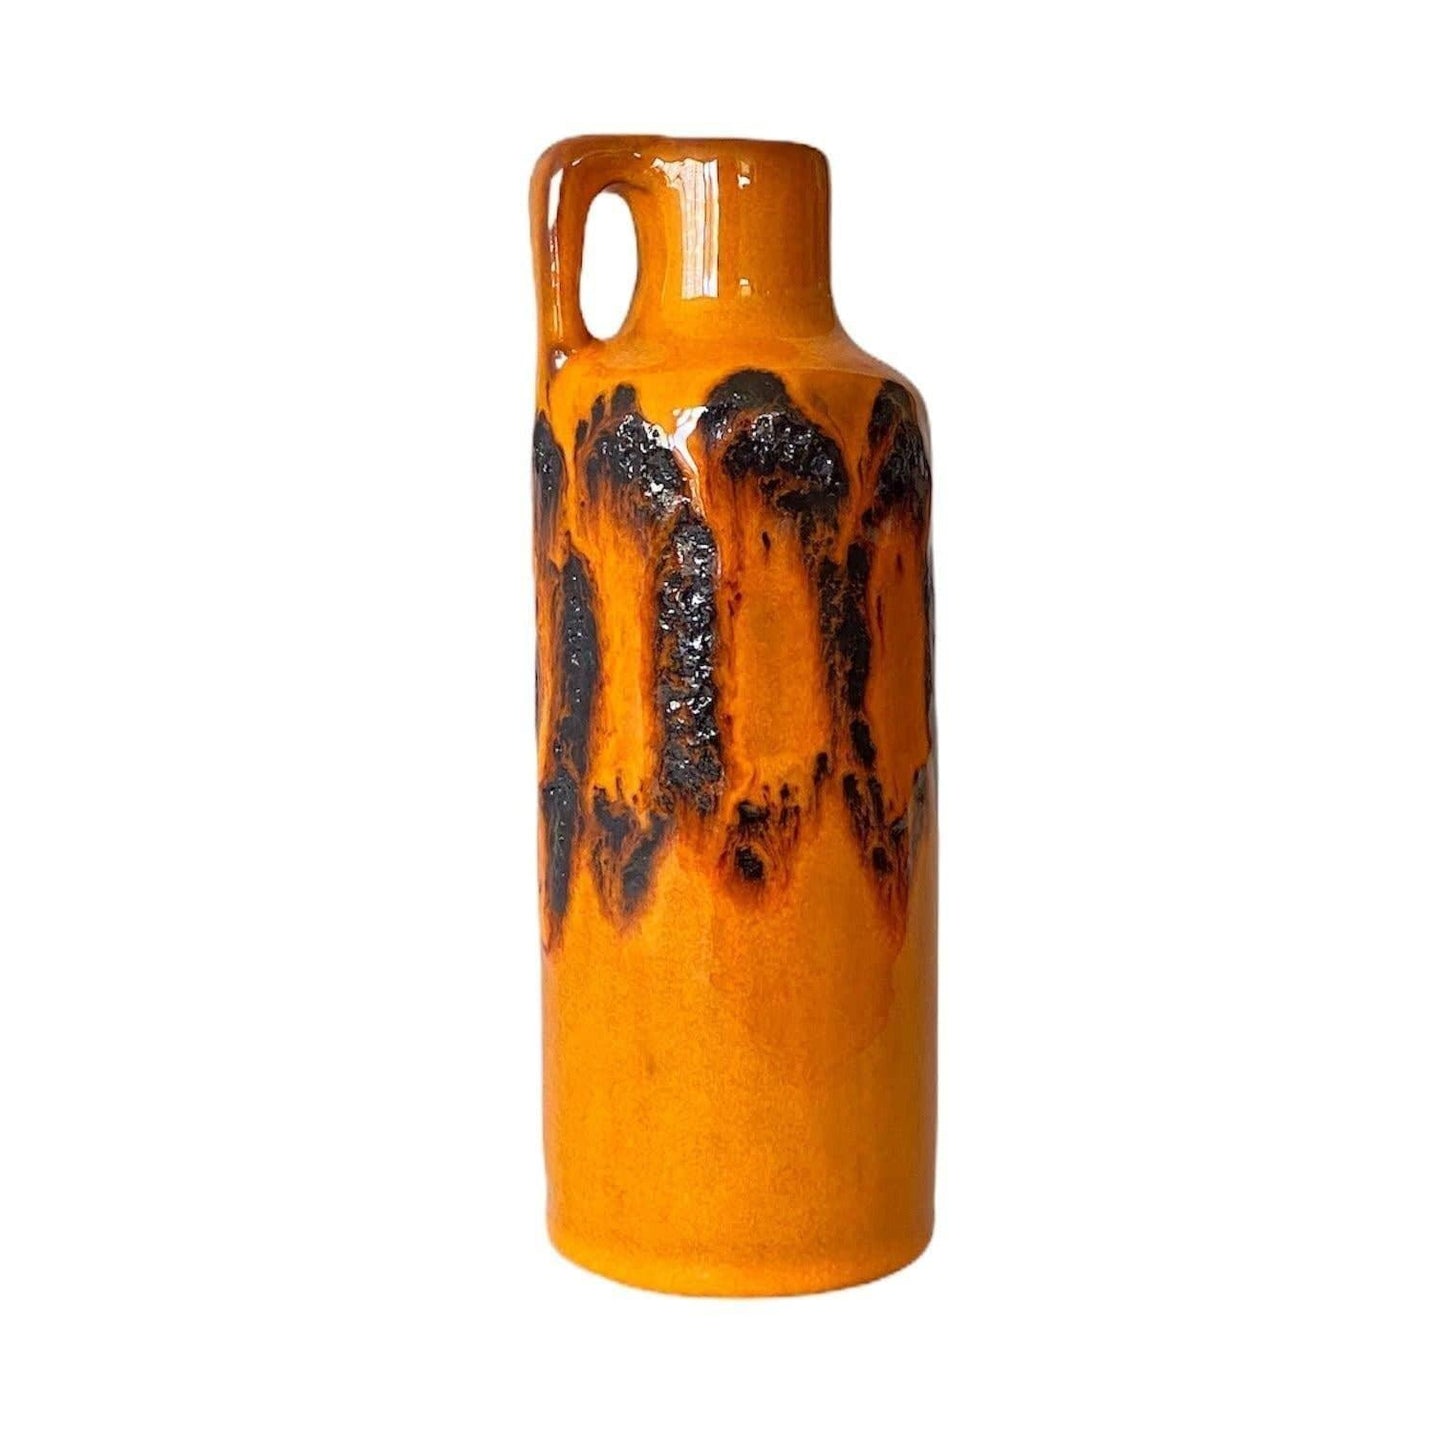 Vintage Ceramic Jug Vase Orange with Black Fat Lava